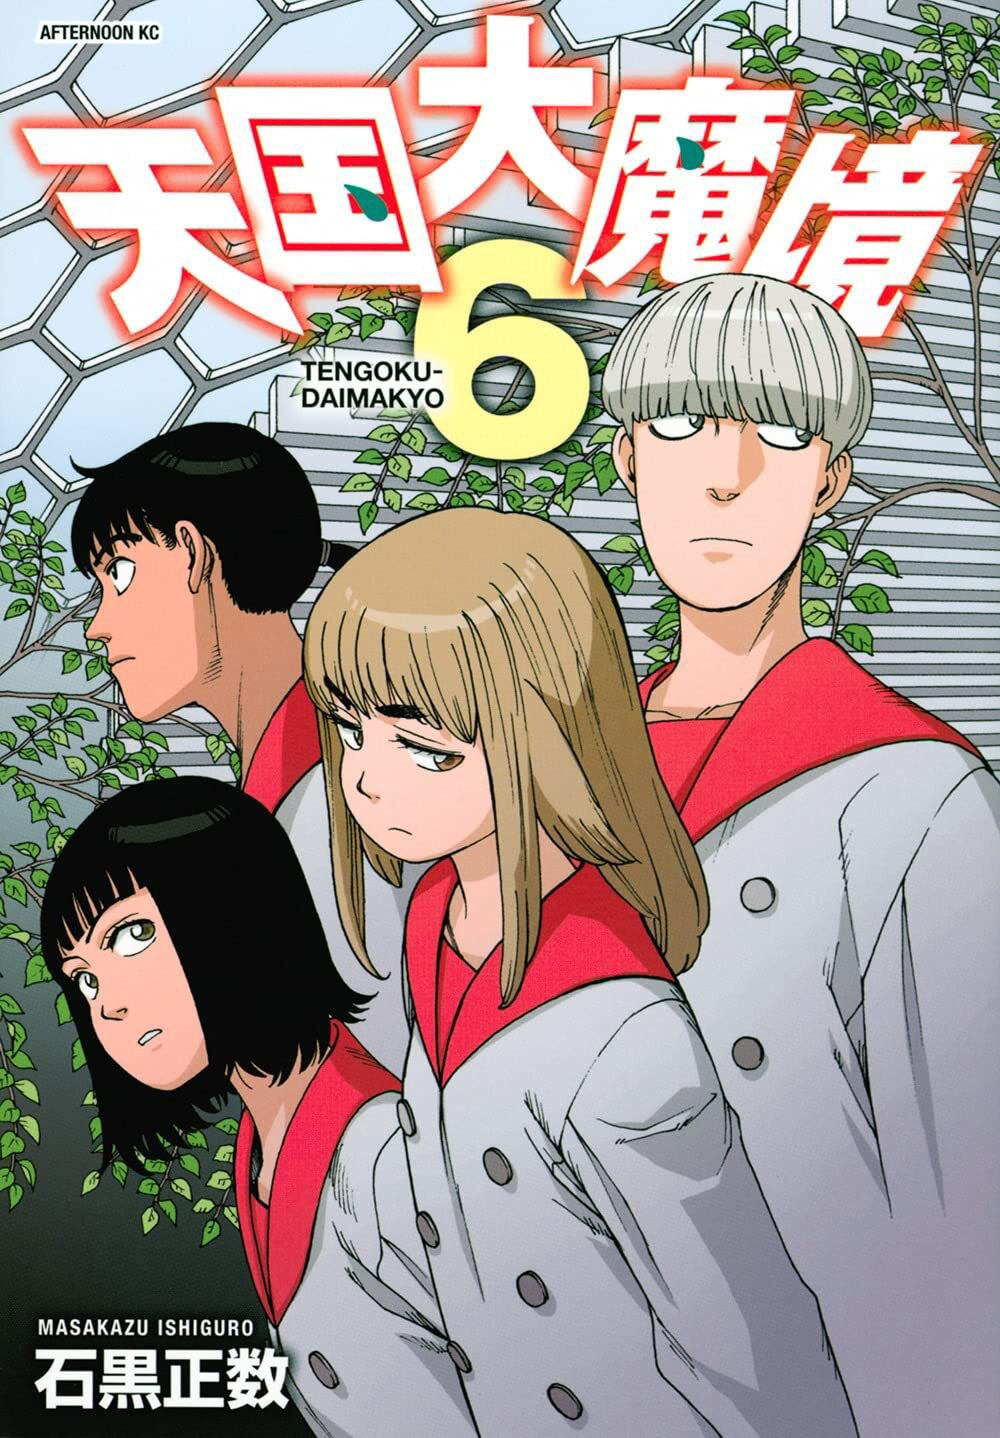 Heavenly Delusion Volume 6 - Manga - BuyAnime.com - 9781634428484